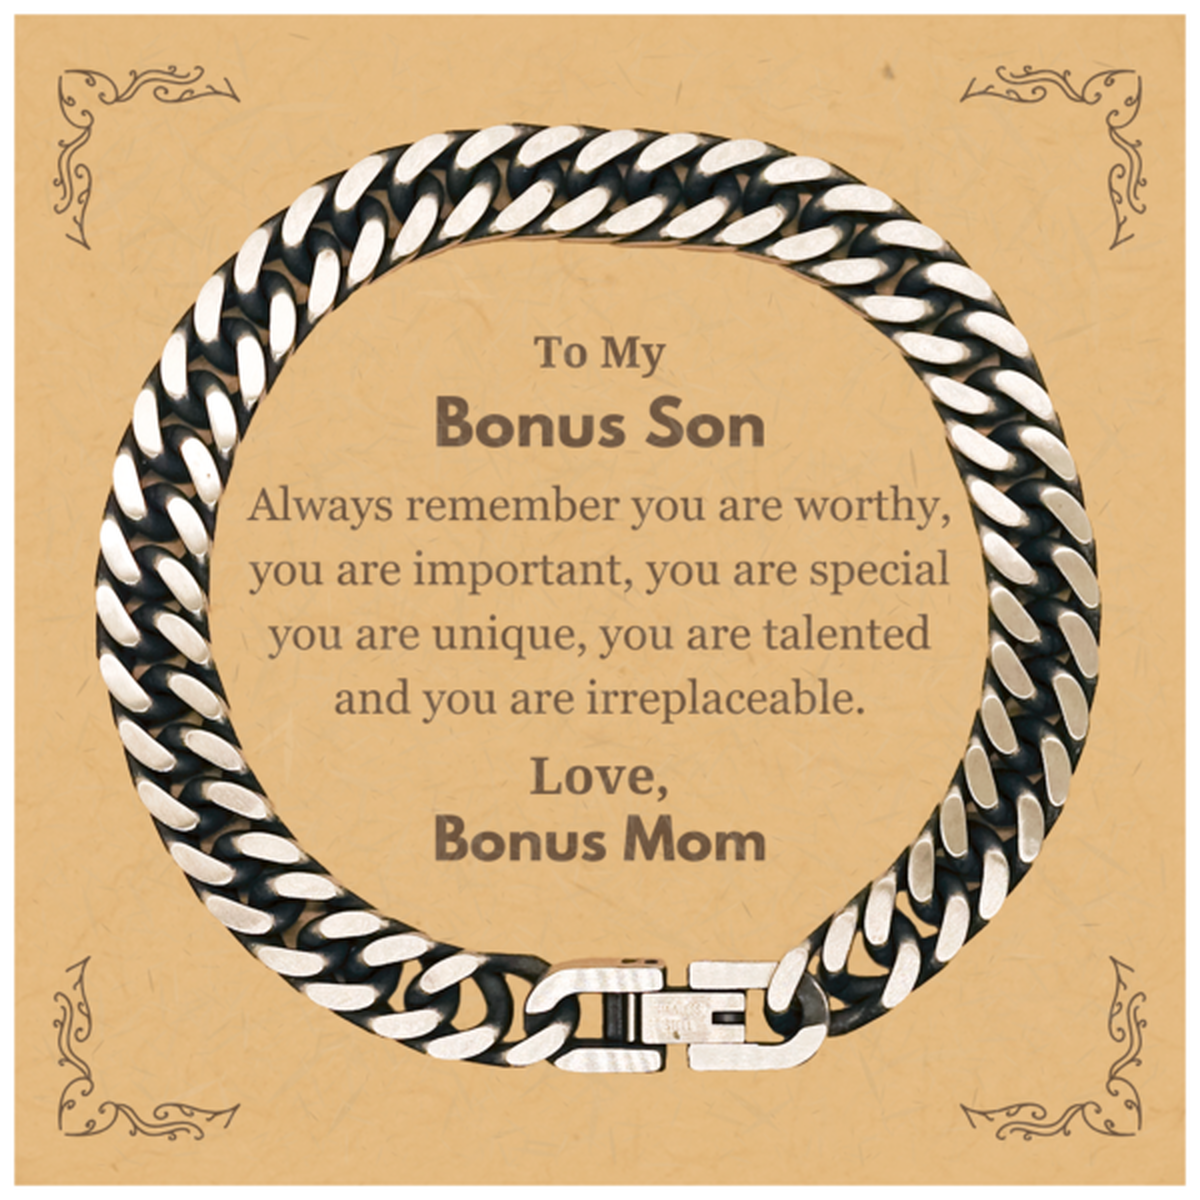 Bonus Son Birthday Gifts from Bonus Mom, Inspirational Cuban Link Chain Bracelet for Bonus Son Christmas Graduation Gifts for Bonus Son Always remember you are worthy, you are important. Love, Bonus Mom